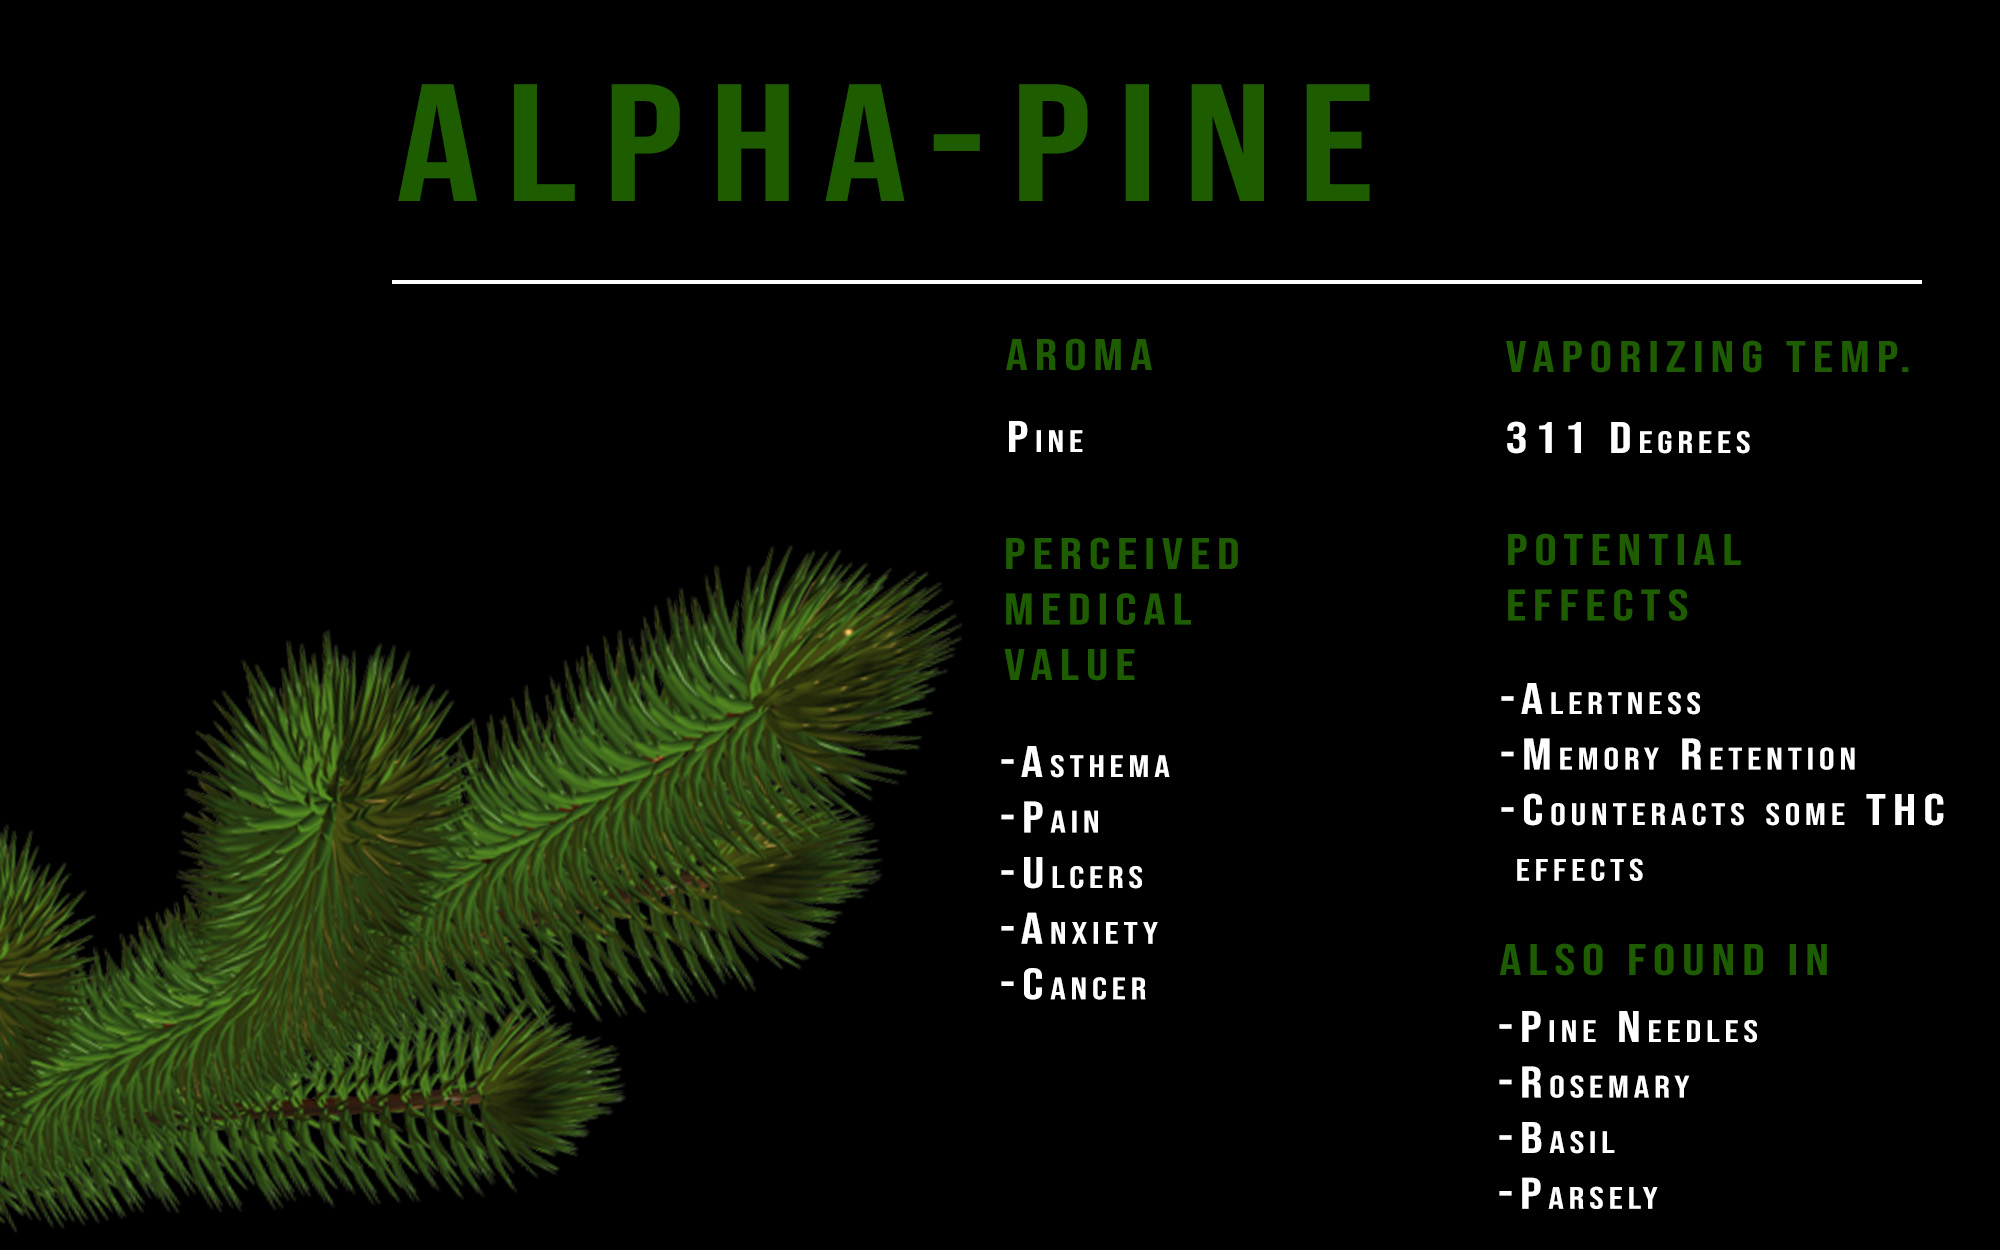 pinene terpene profile